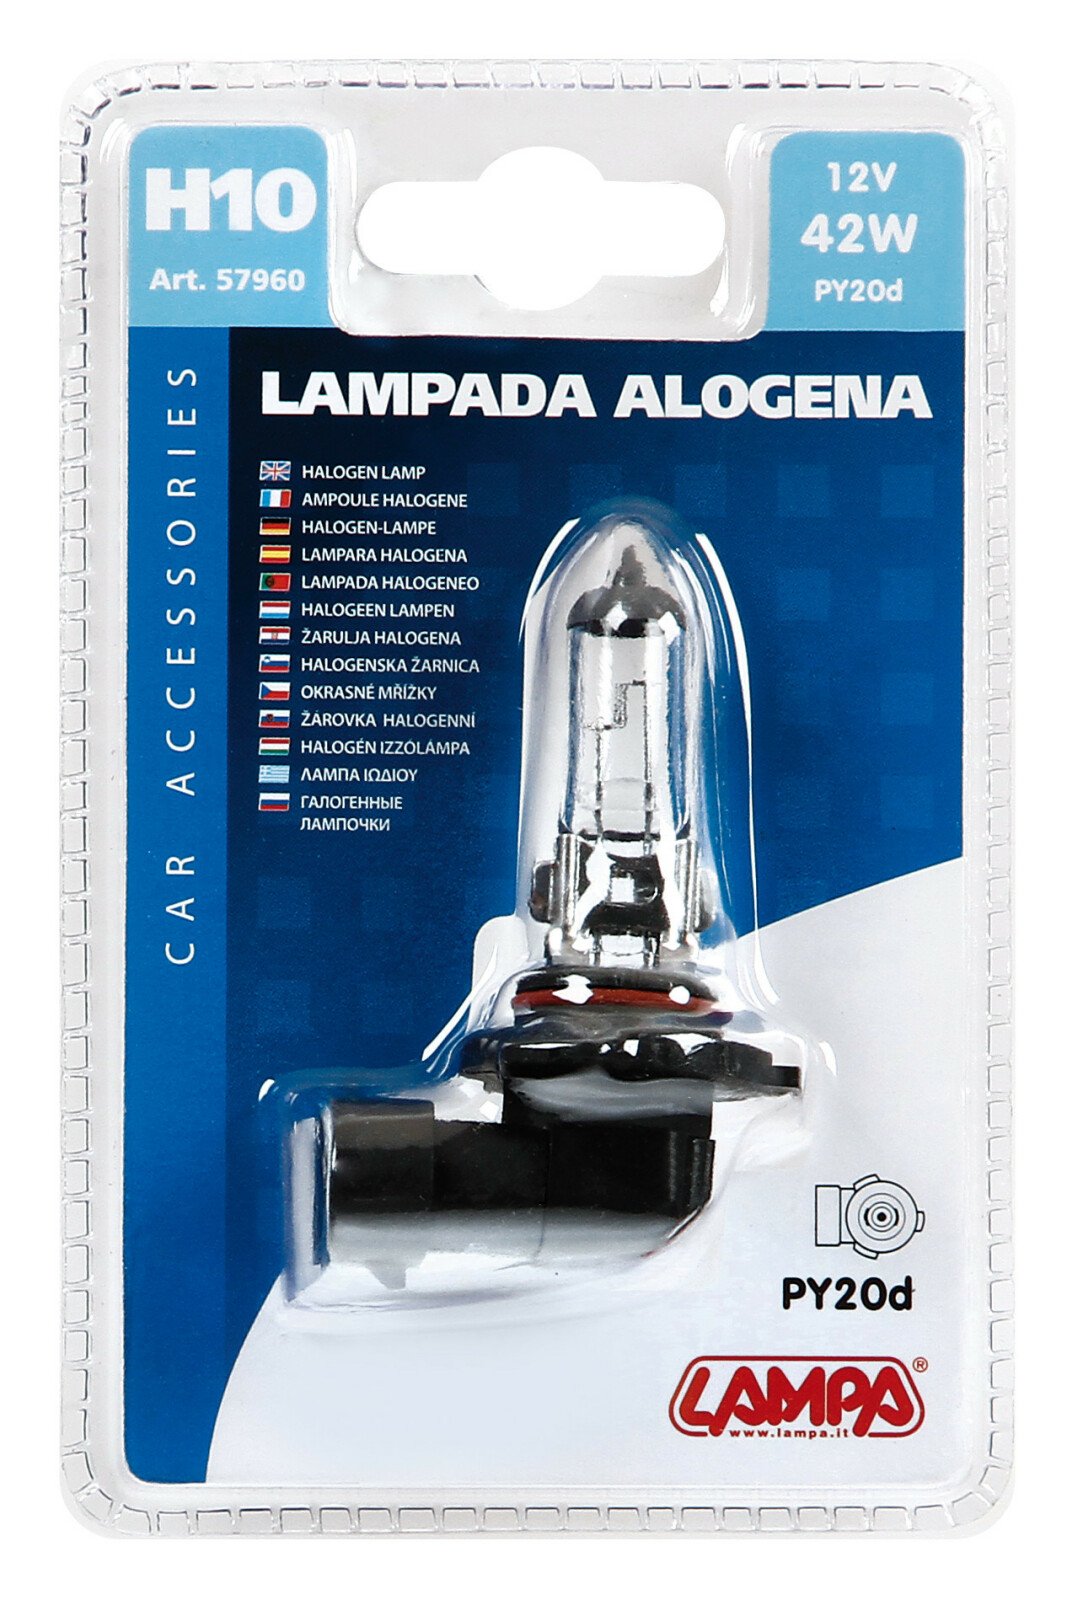 Bec halogen 12V - H10 - 42W - PY20d 1buc Lampa thumb